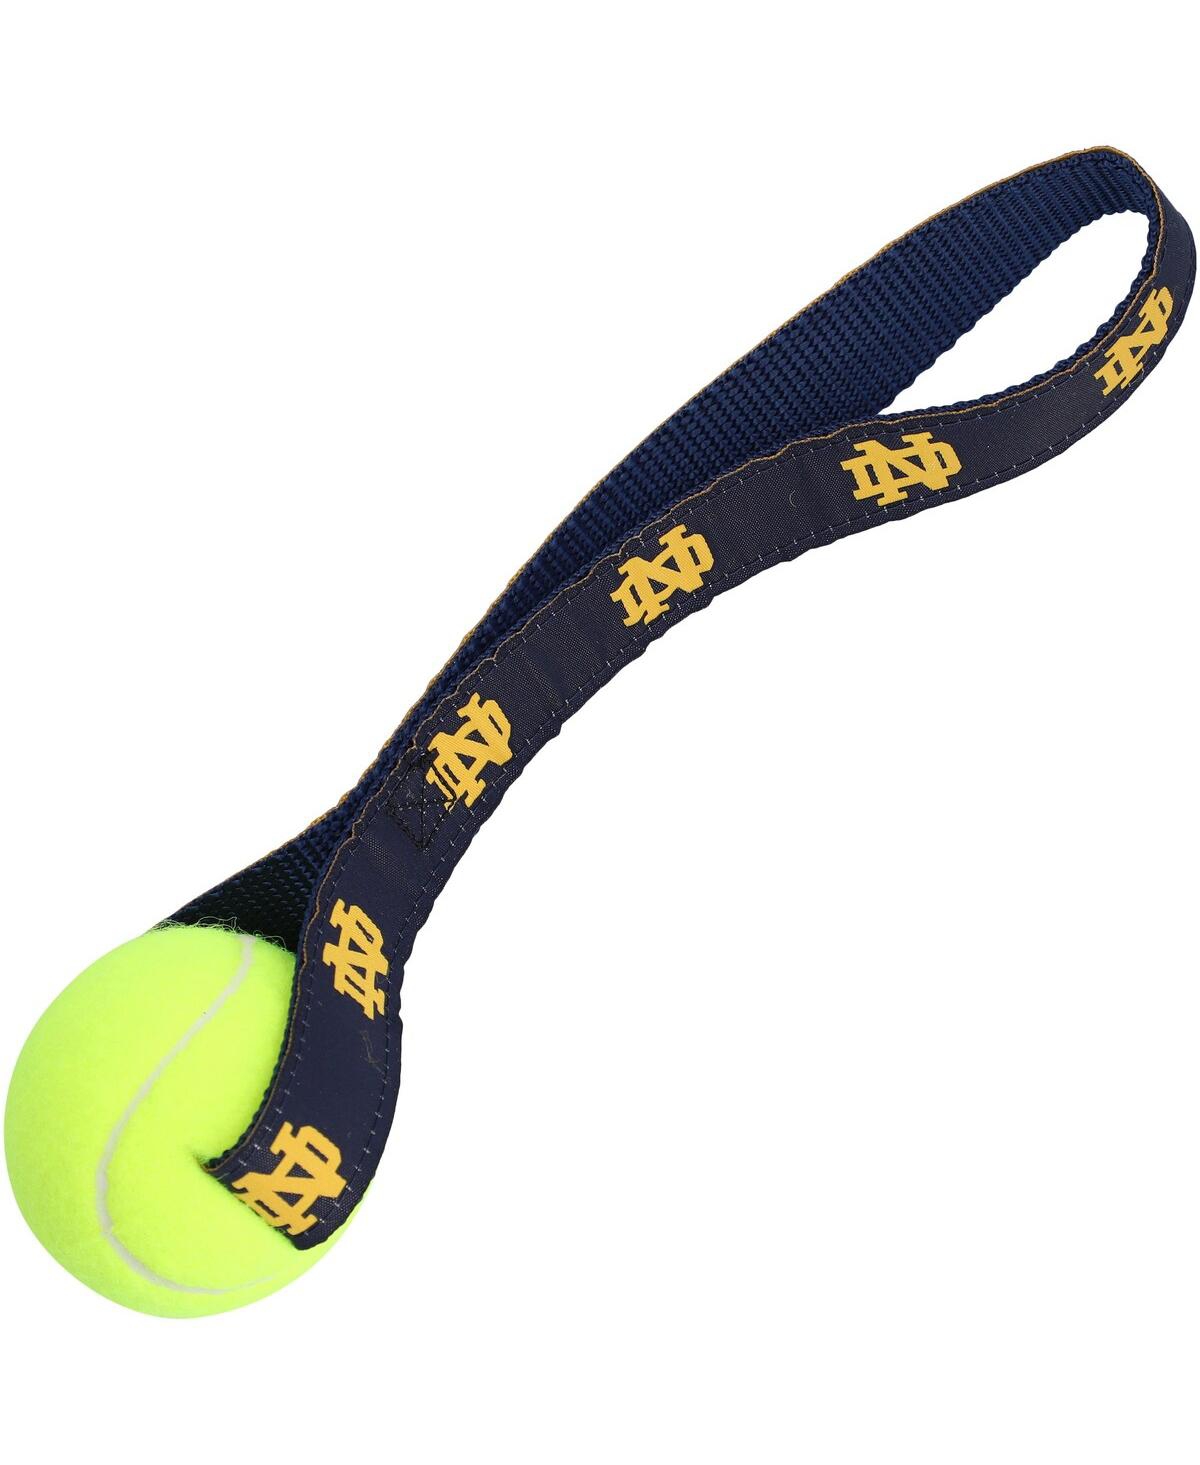 Notre Dame Fighting Irish Tennis Ball Tug Toy - Navy